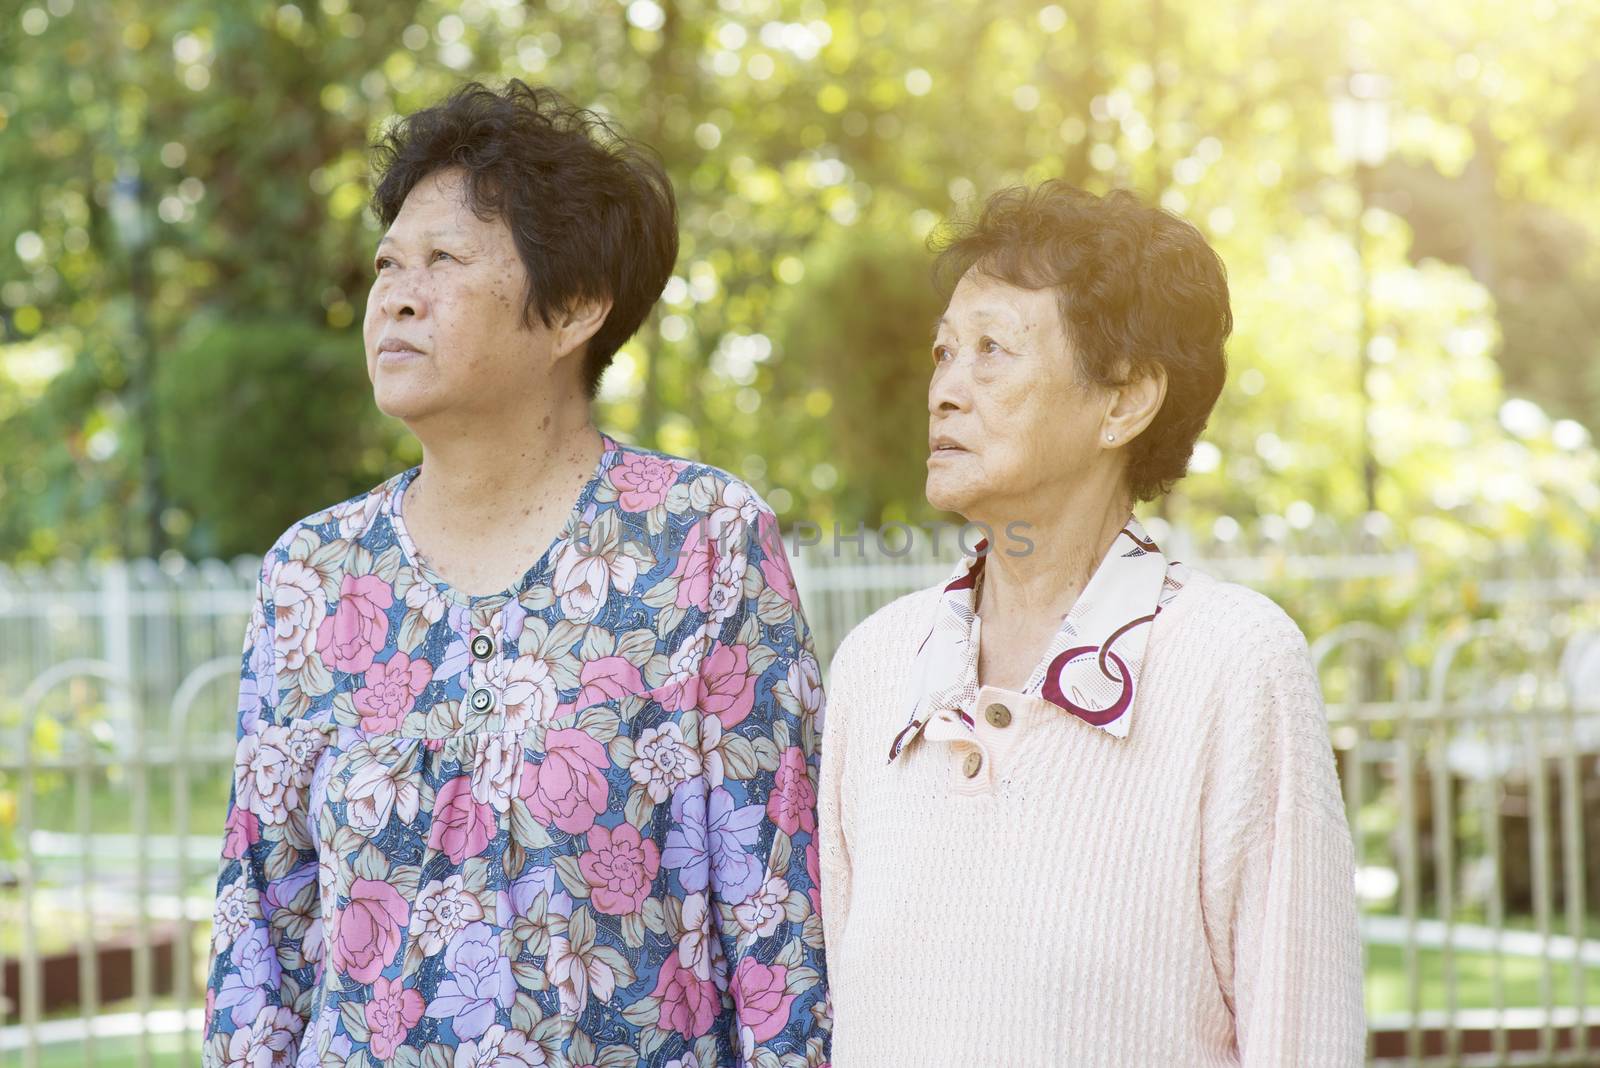 Candid shot of Asian elderly women walking at outdoor garden park in the morning.